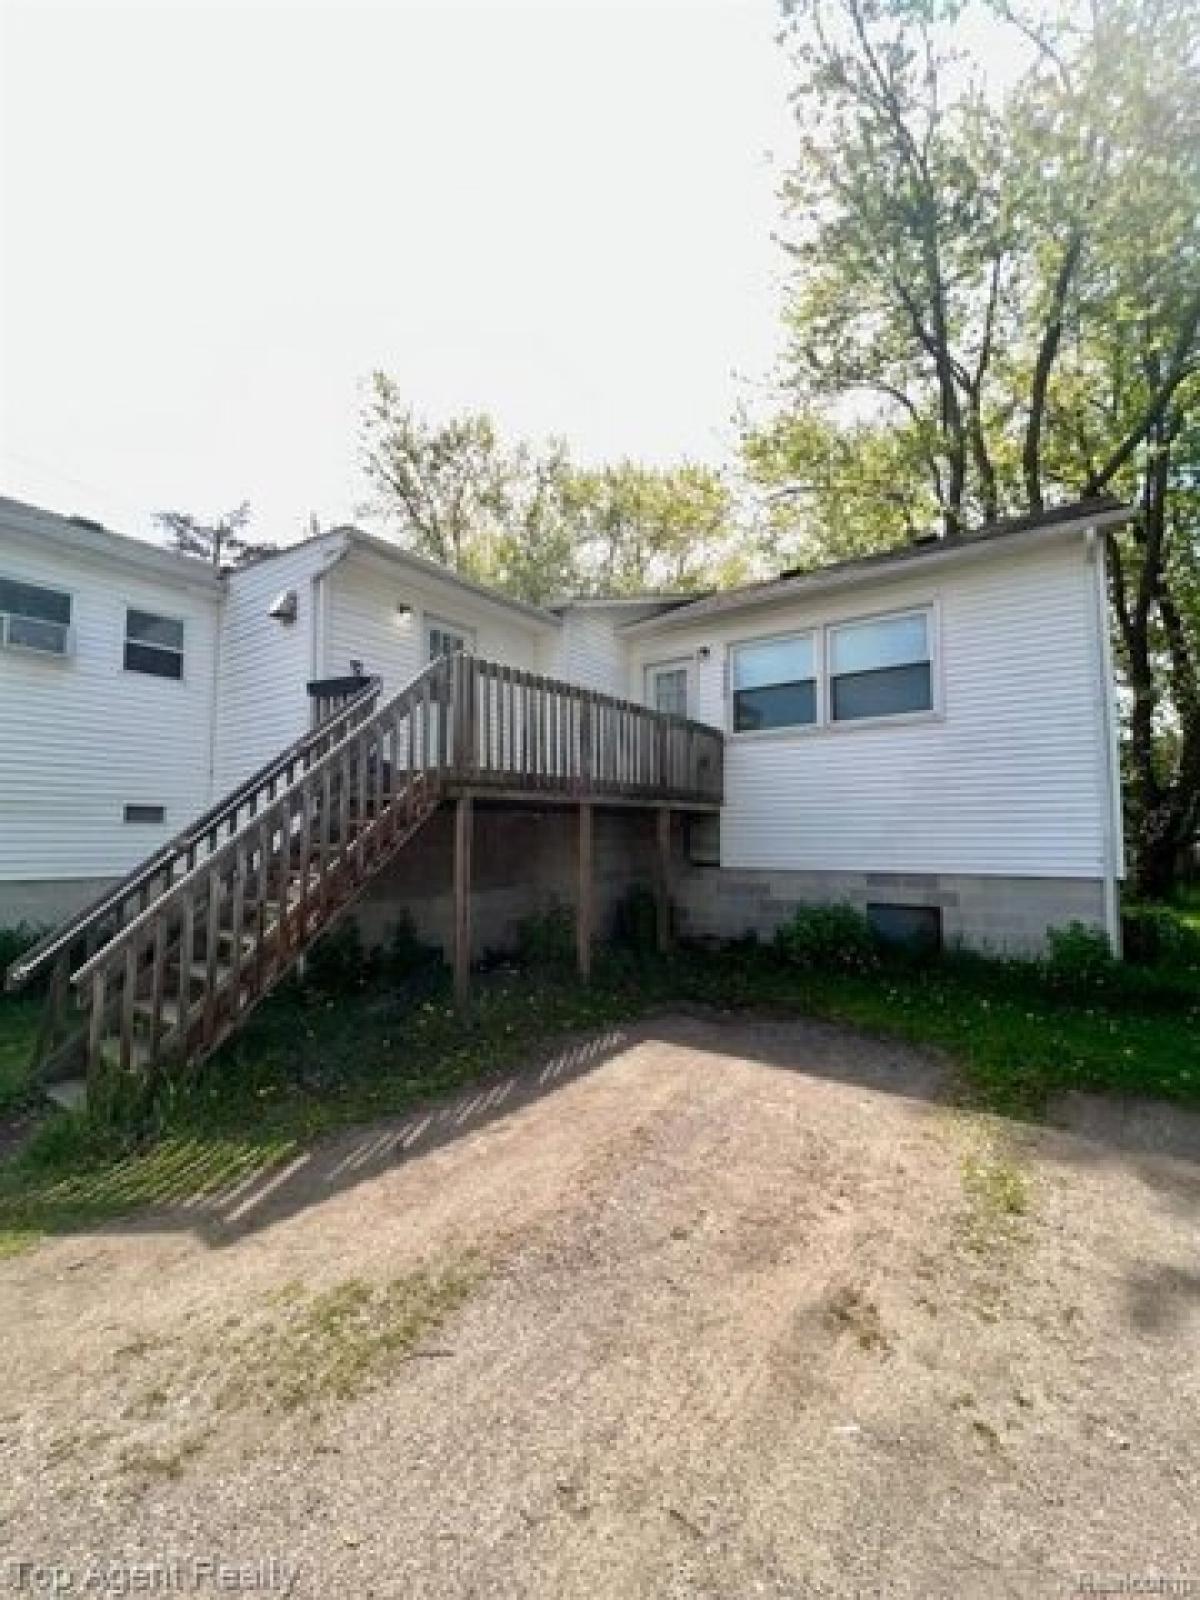 Picture of Home For Sale in Utica, Michigan, United States